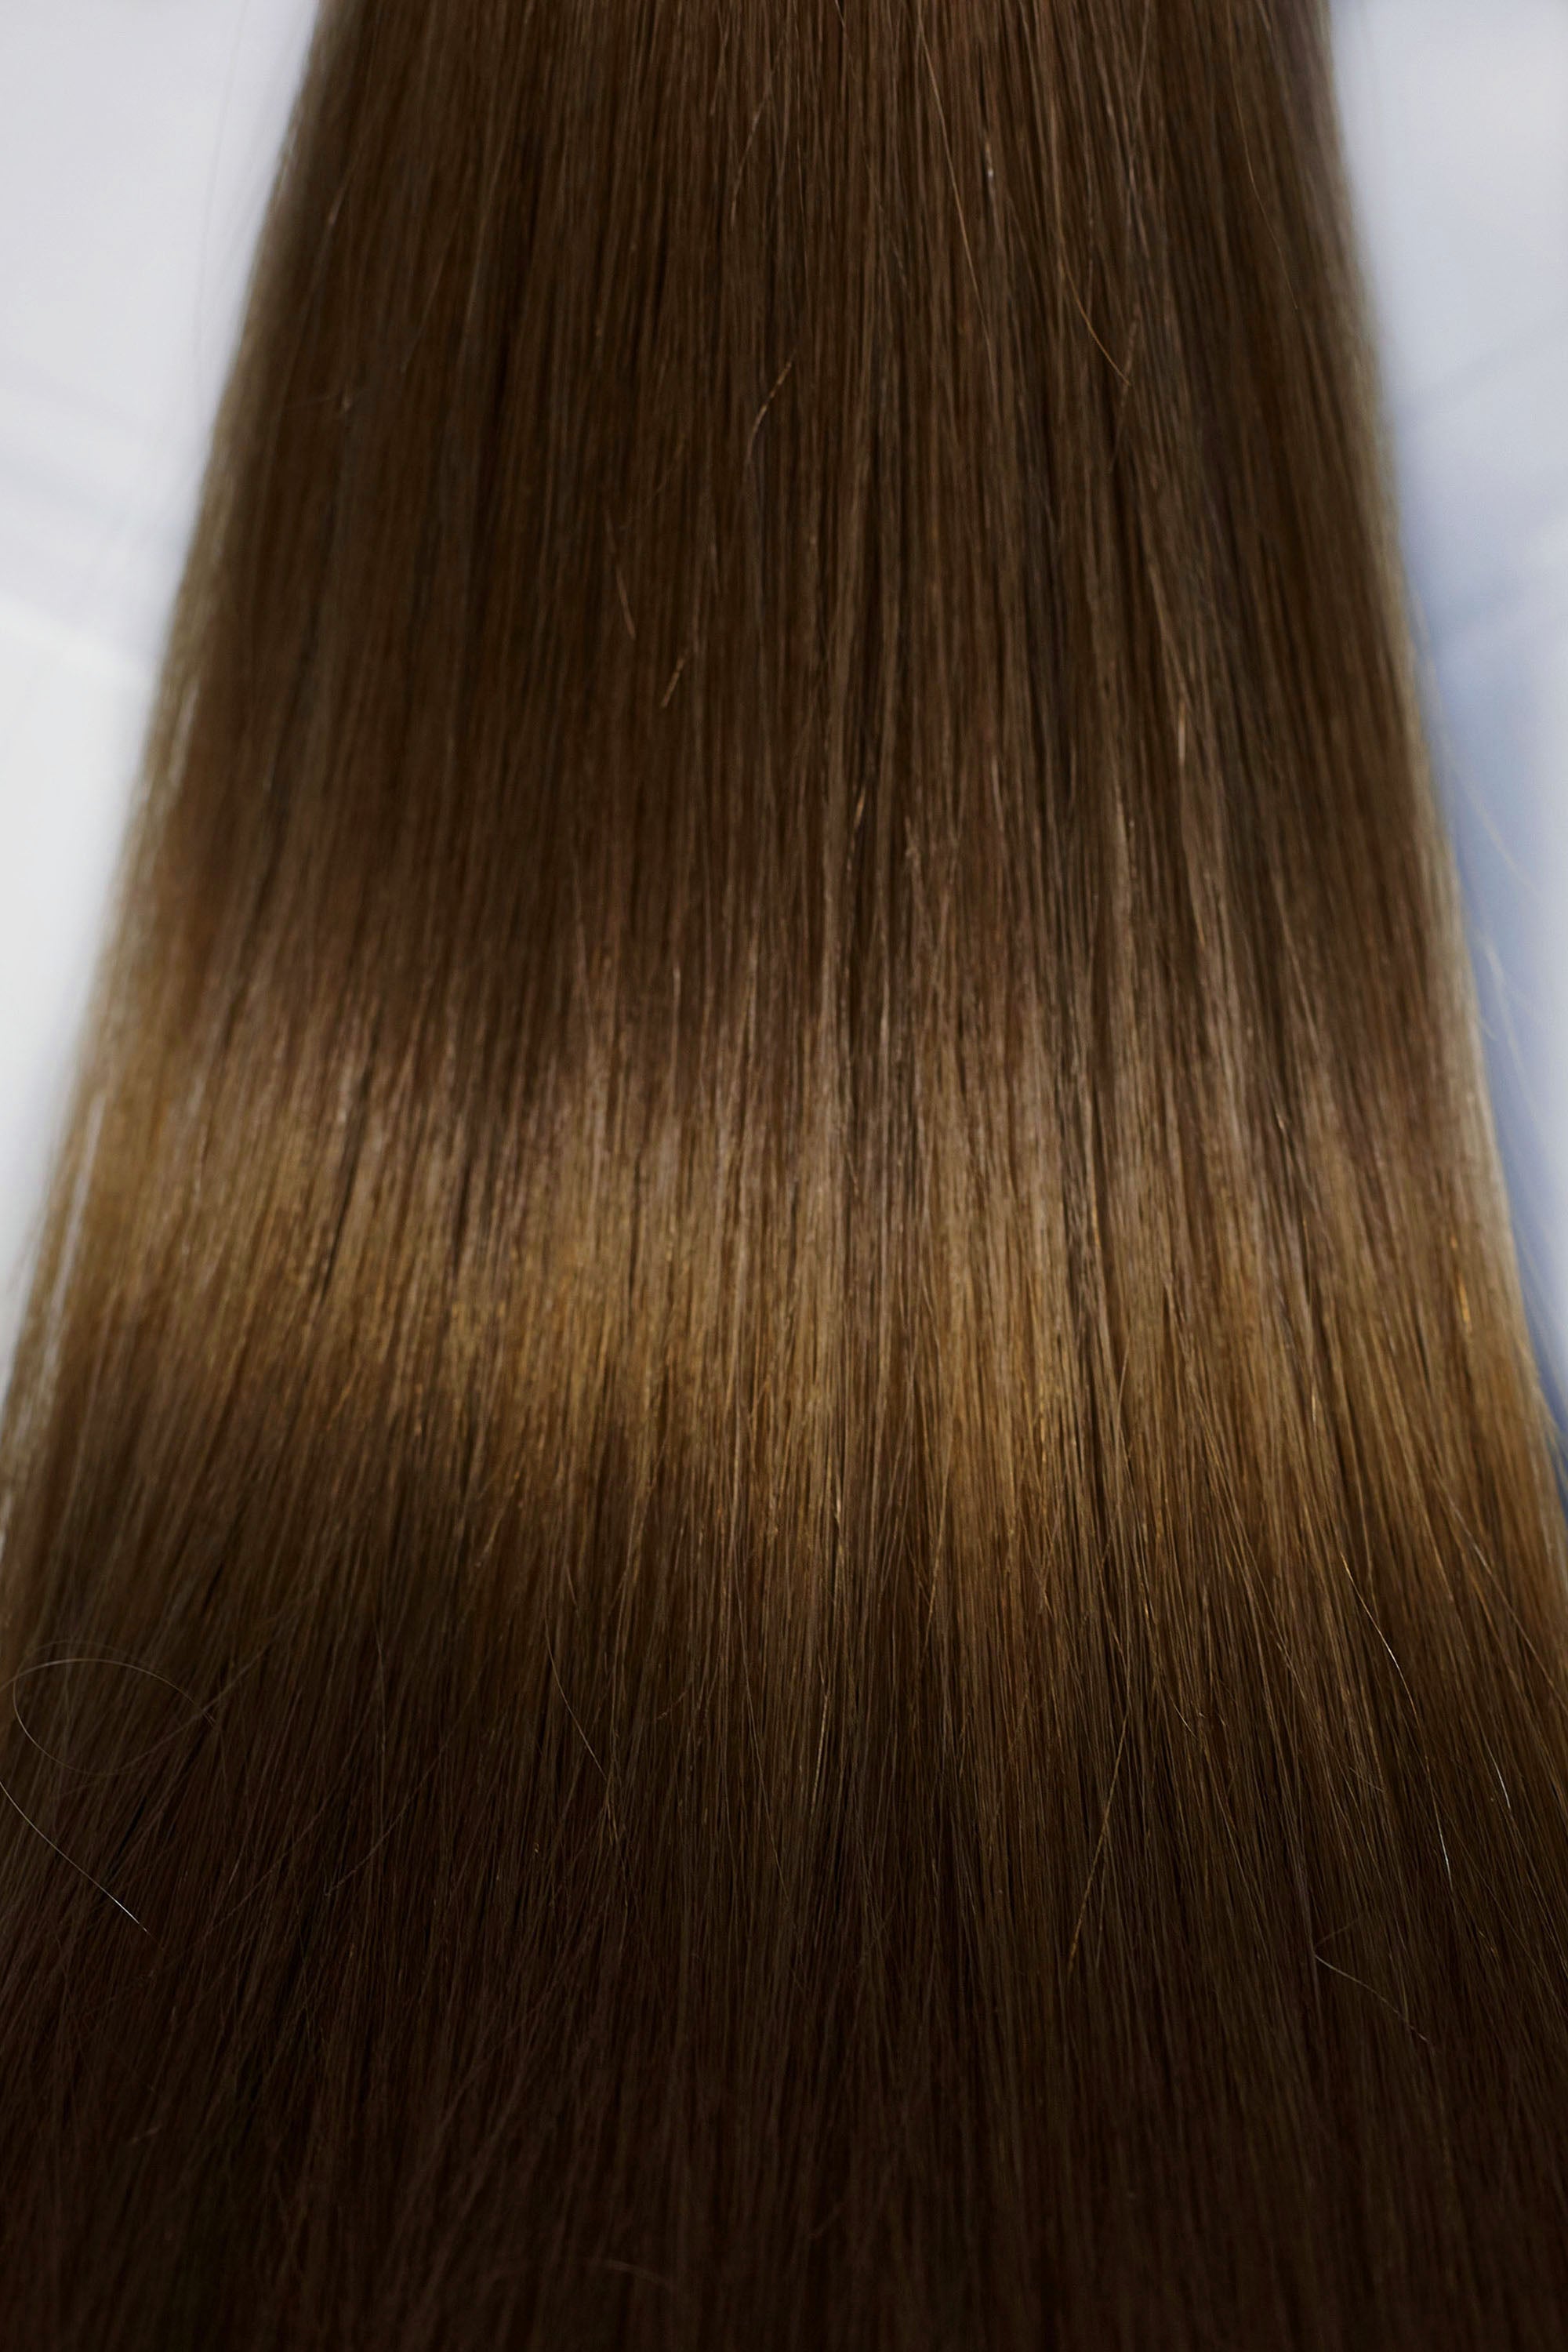 Behair professional Bulk hair "Premium" 24" (60cm) Natural Straight Honey Walnut Brown #5 - 25g hair extensions